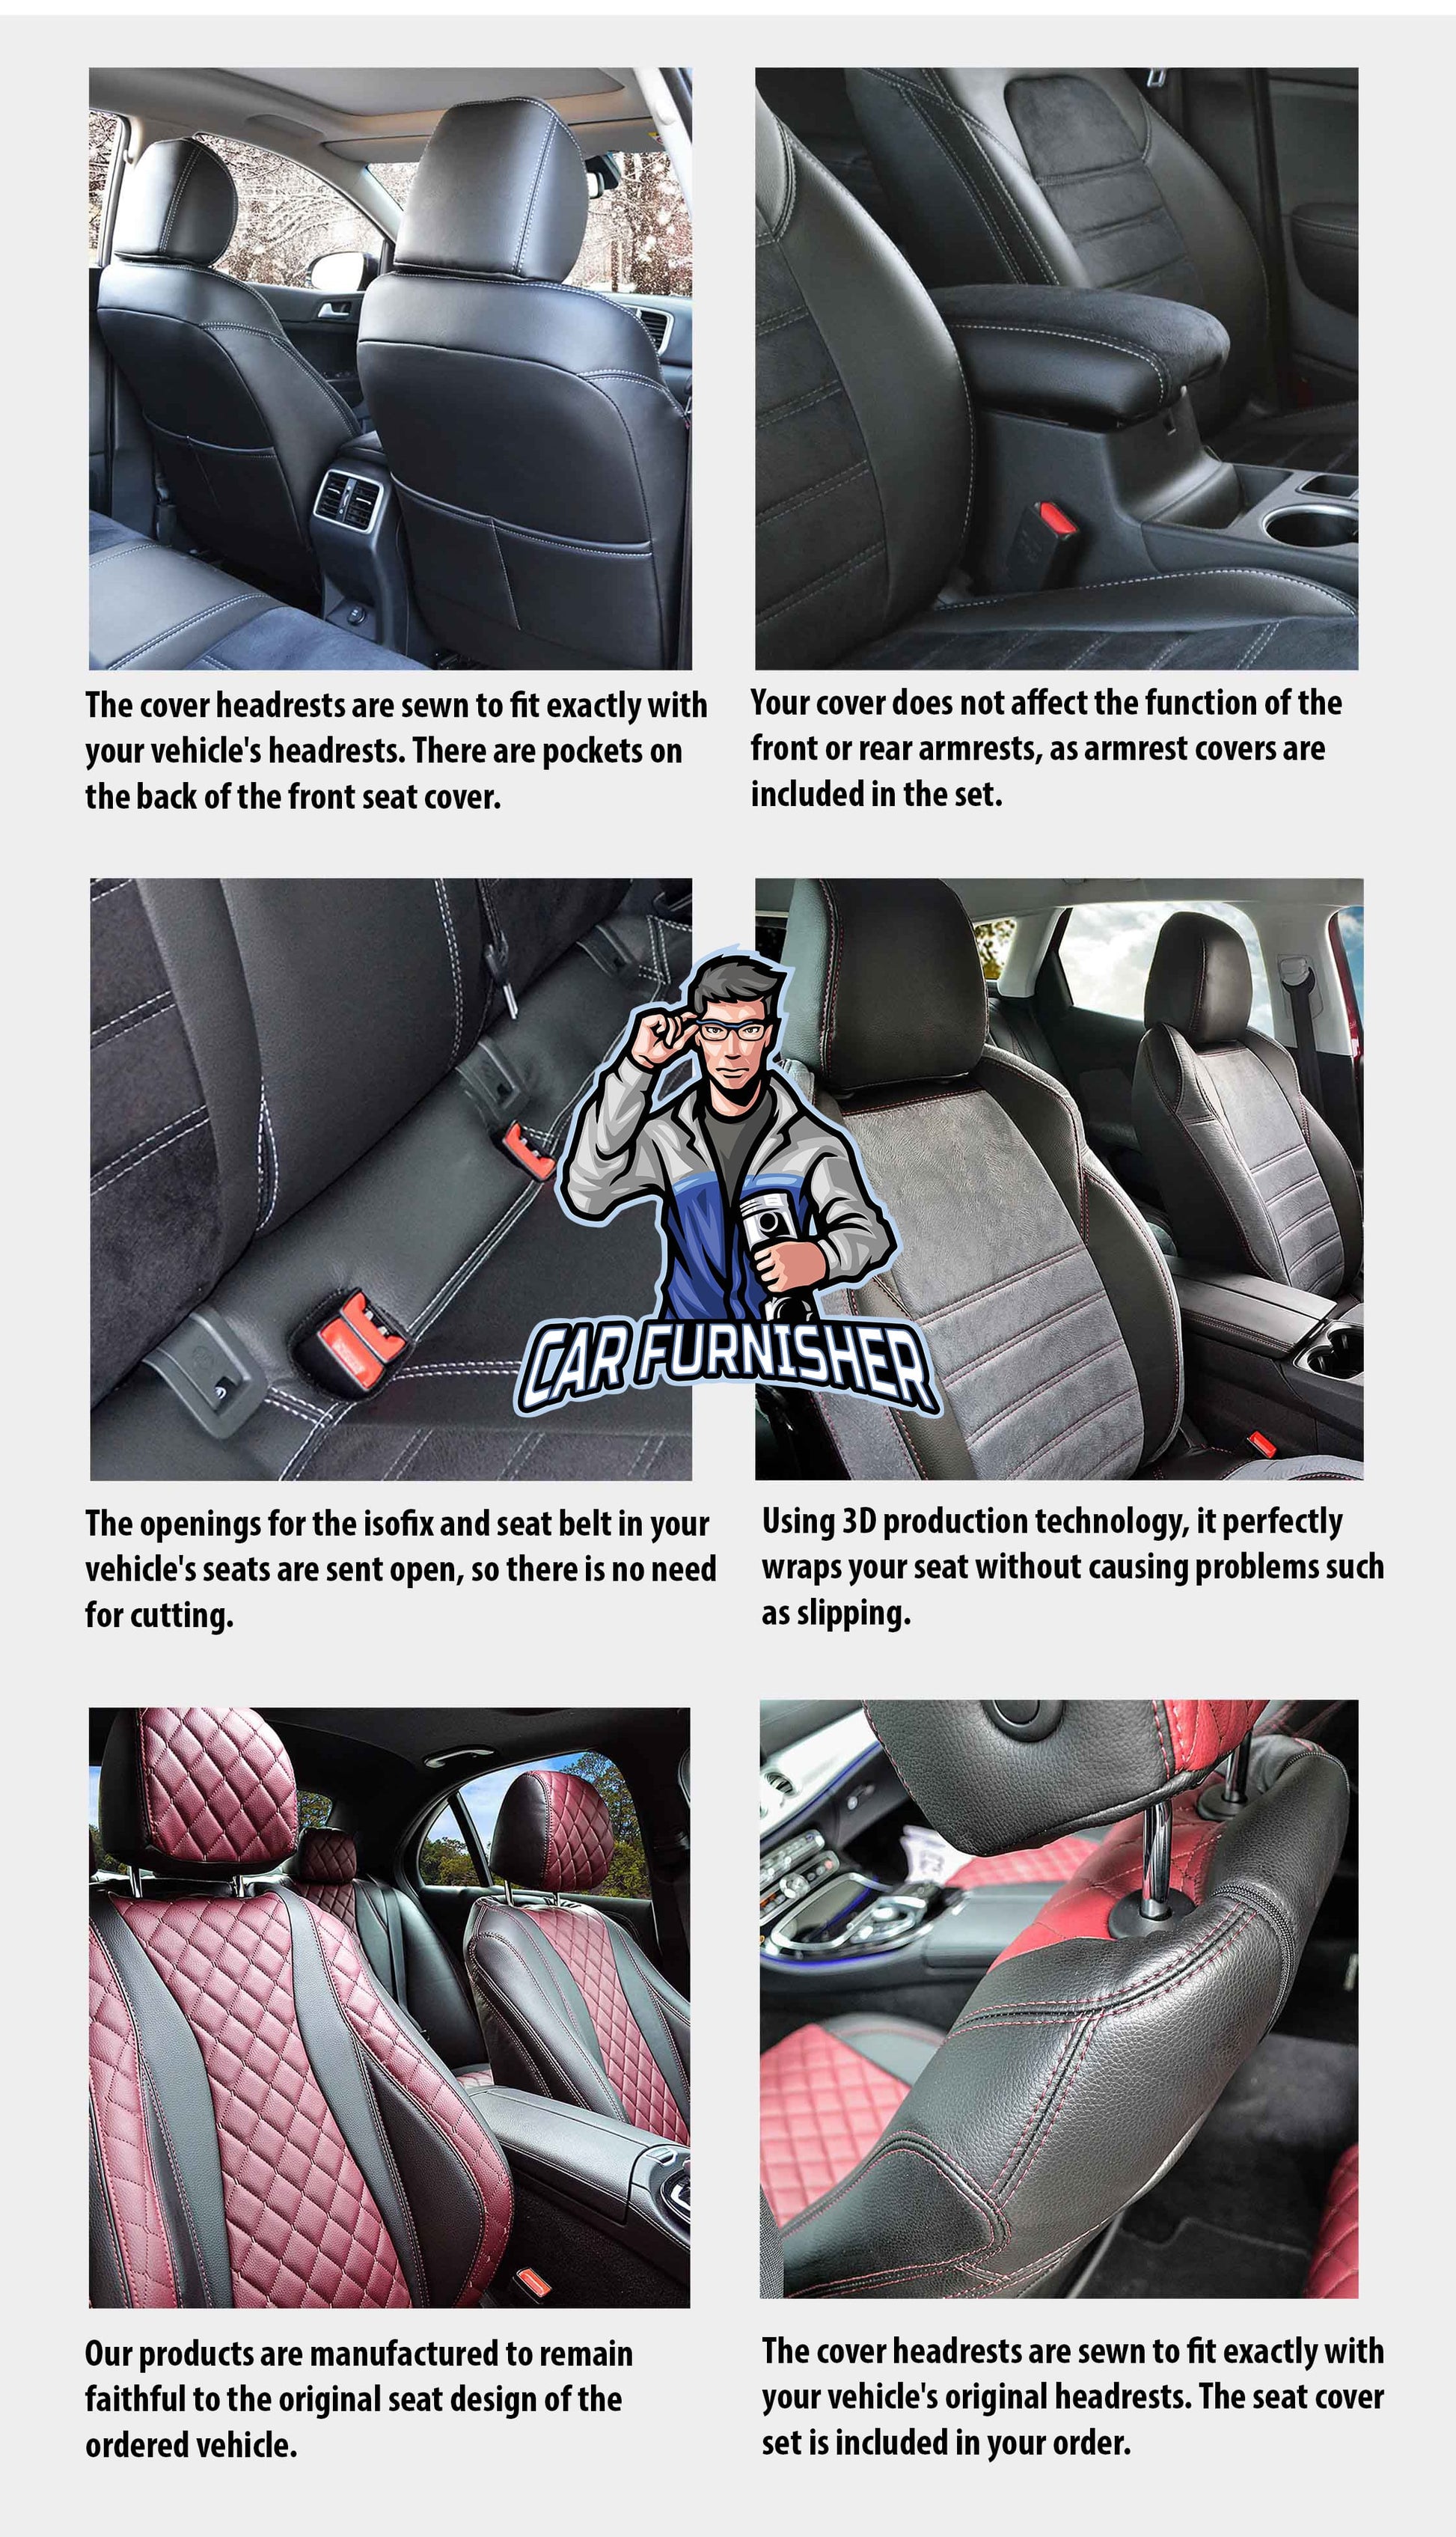 Fiat Linea Car Seat Covers 2007-2017 New York Design Smoked Black Full Set (5 Seats + Handrest) Leather & Fabric